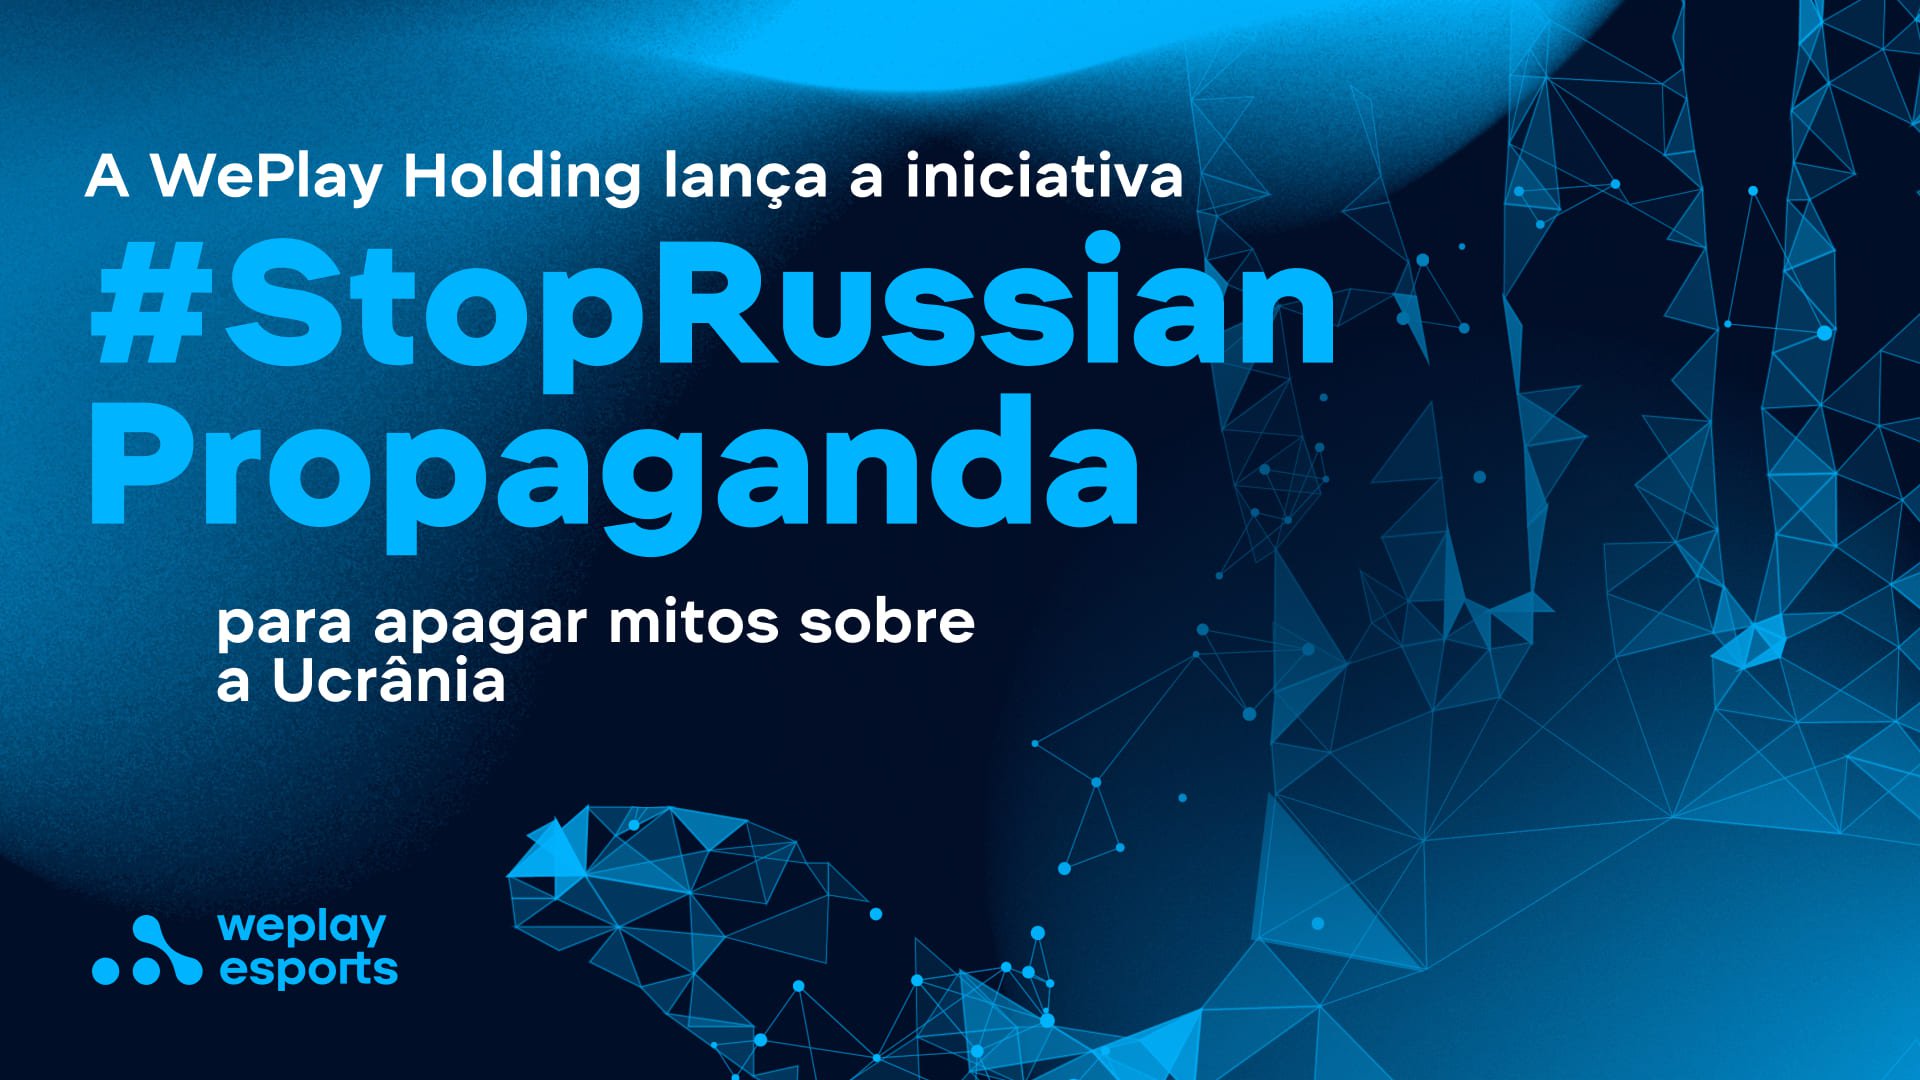 A WePlay Holding lança a iniciativa StopRussianPropaganda. Visual: WePlay Holding